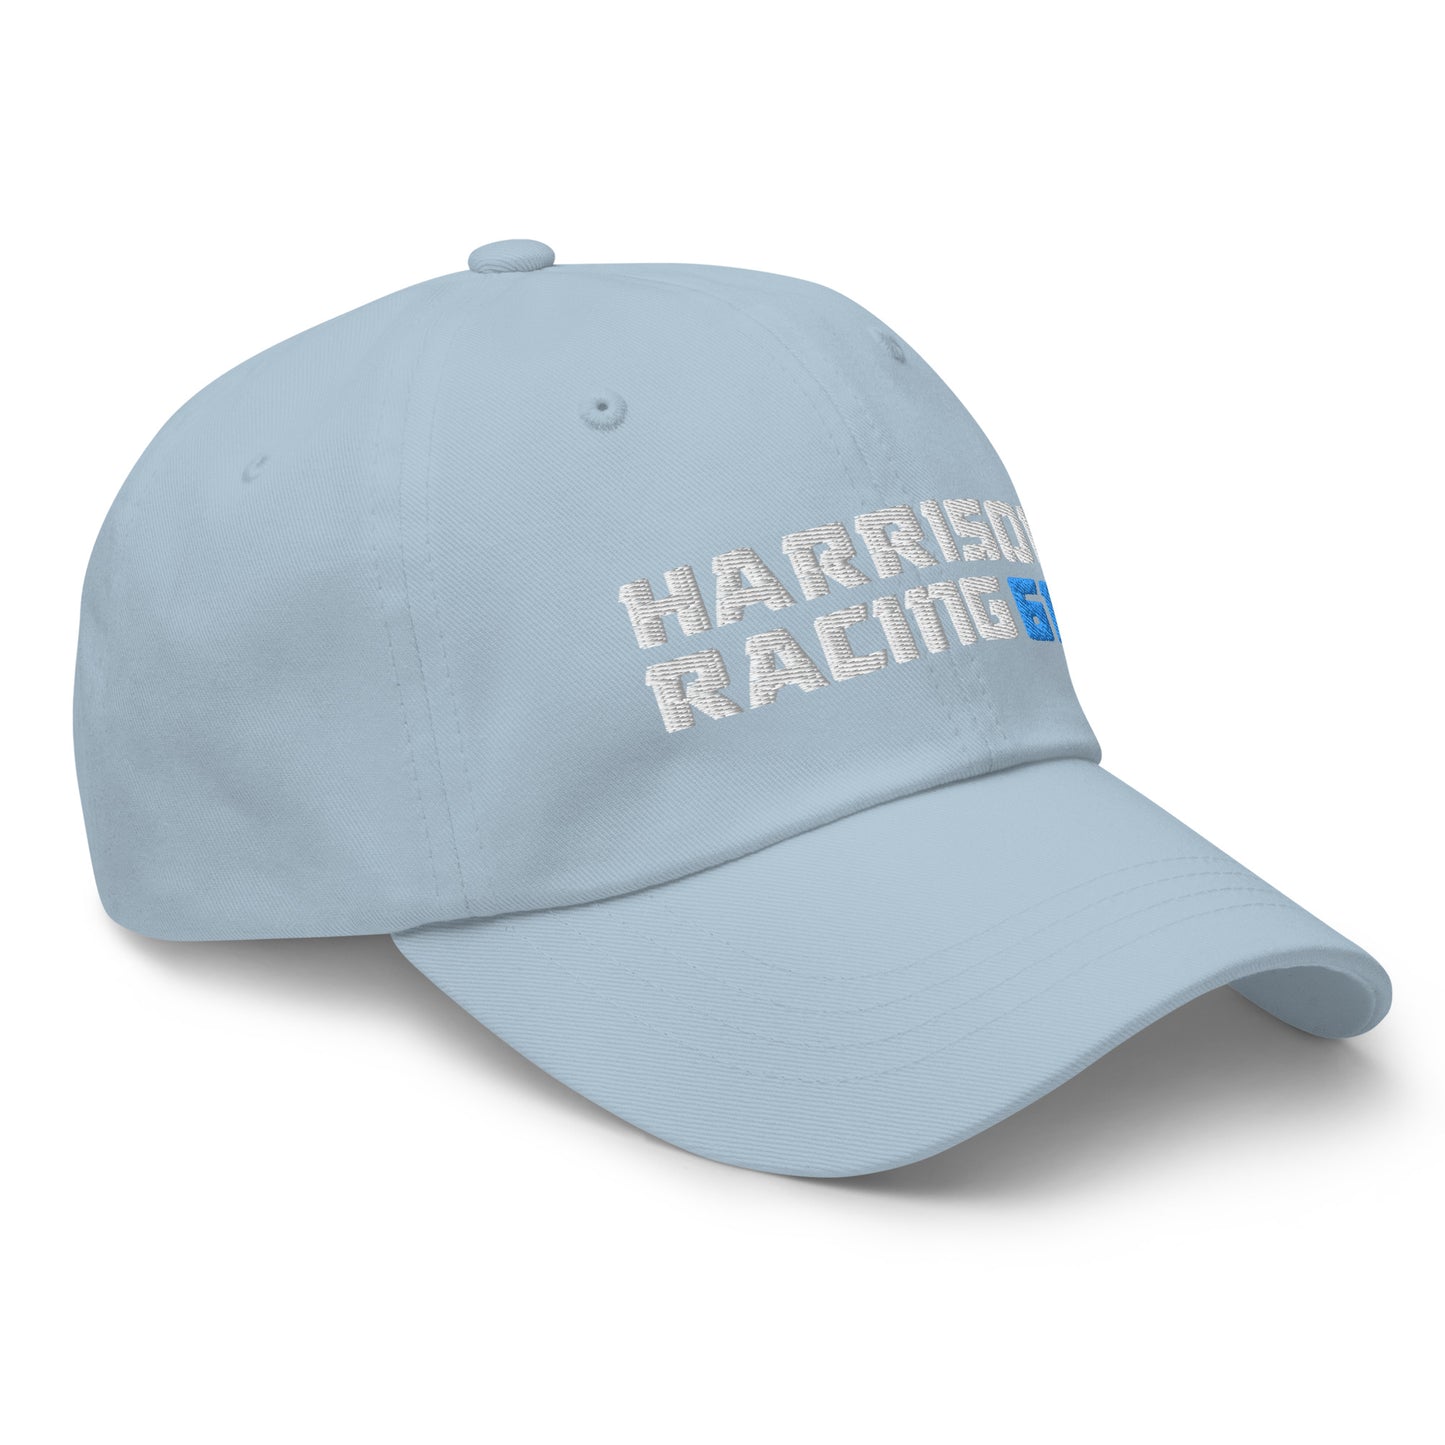 Harrison Racing 613 Dad Hat